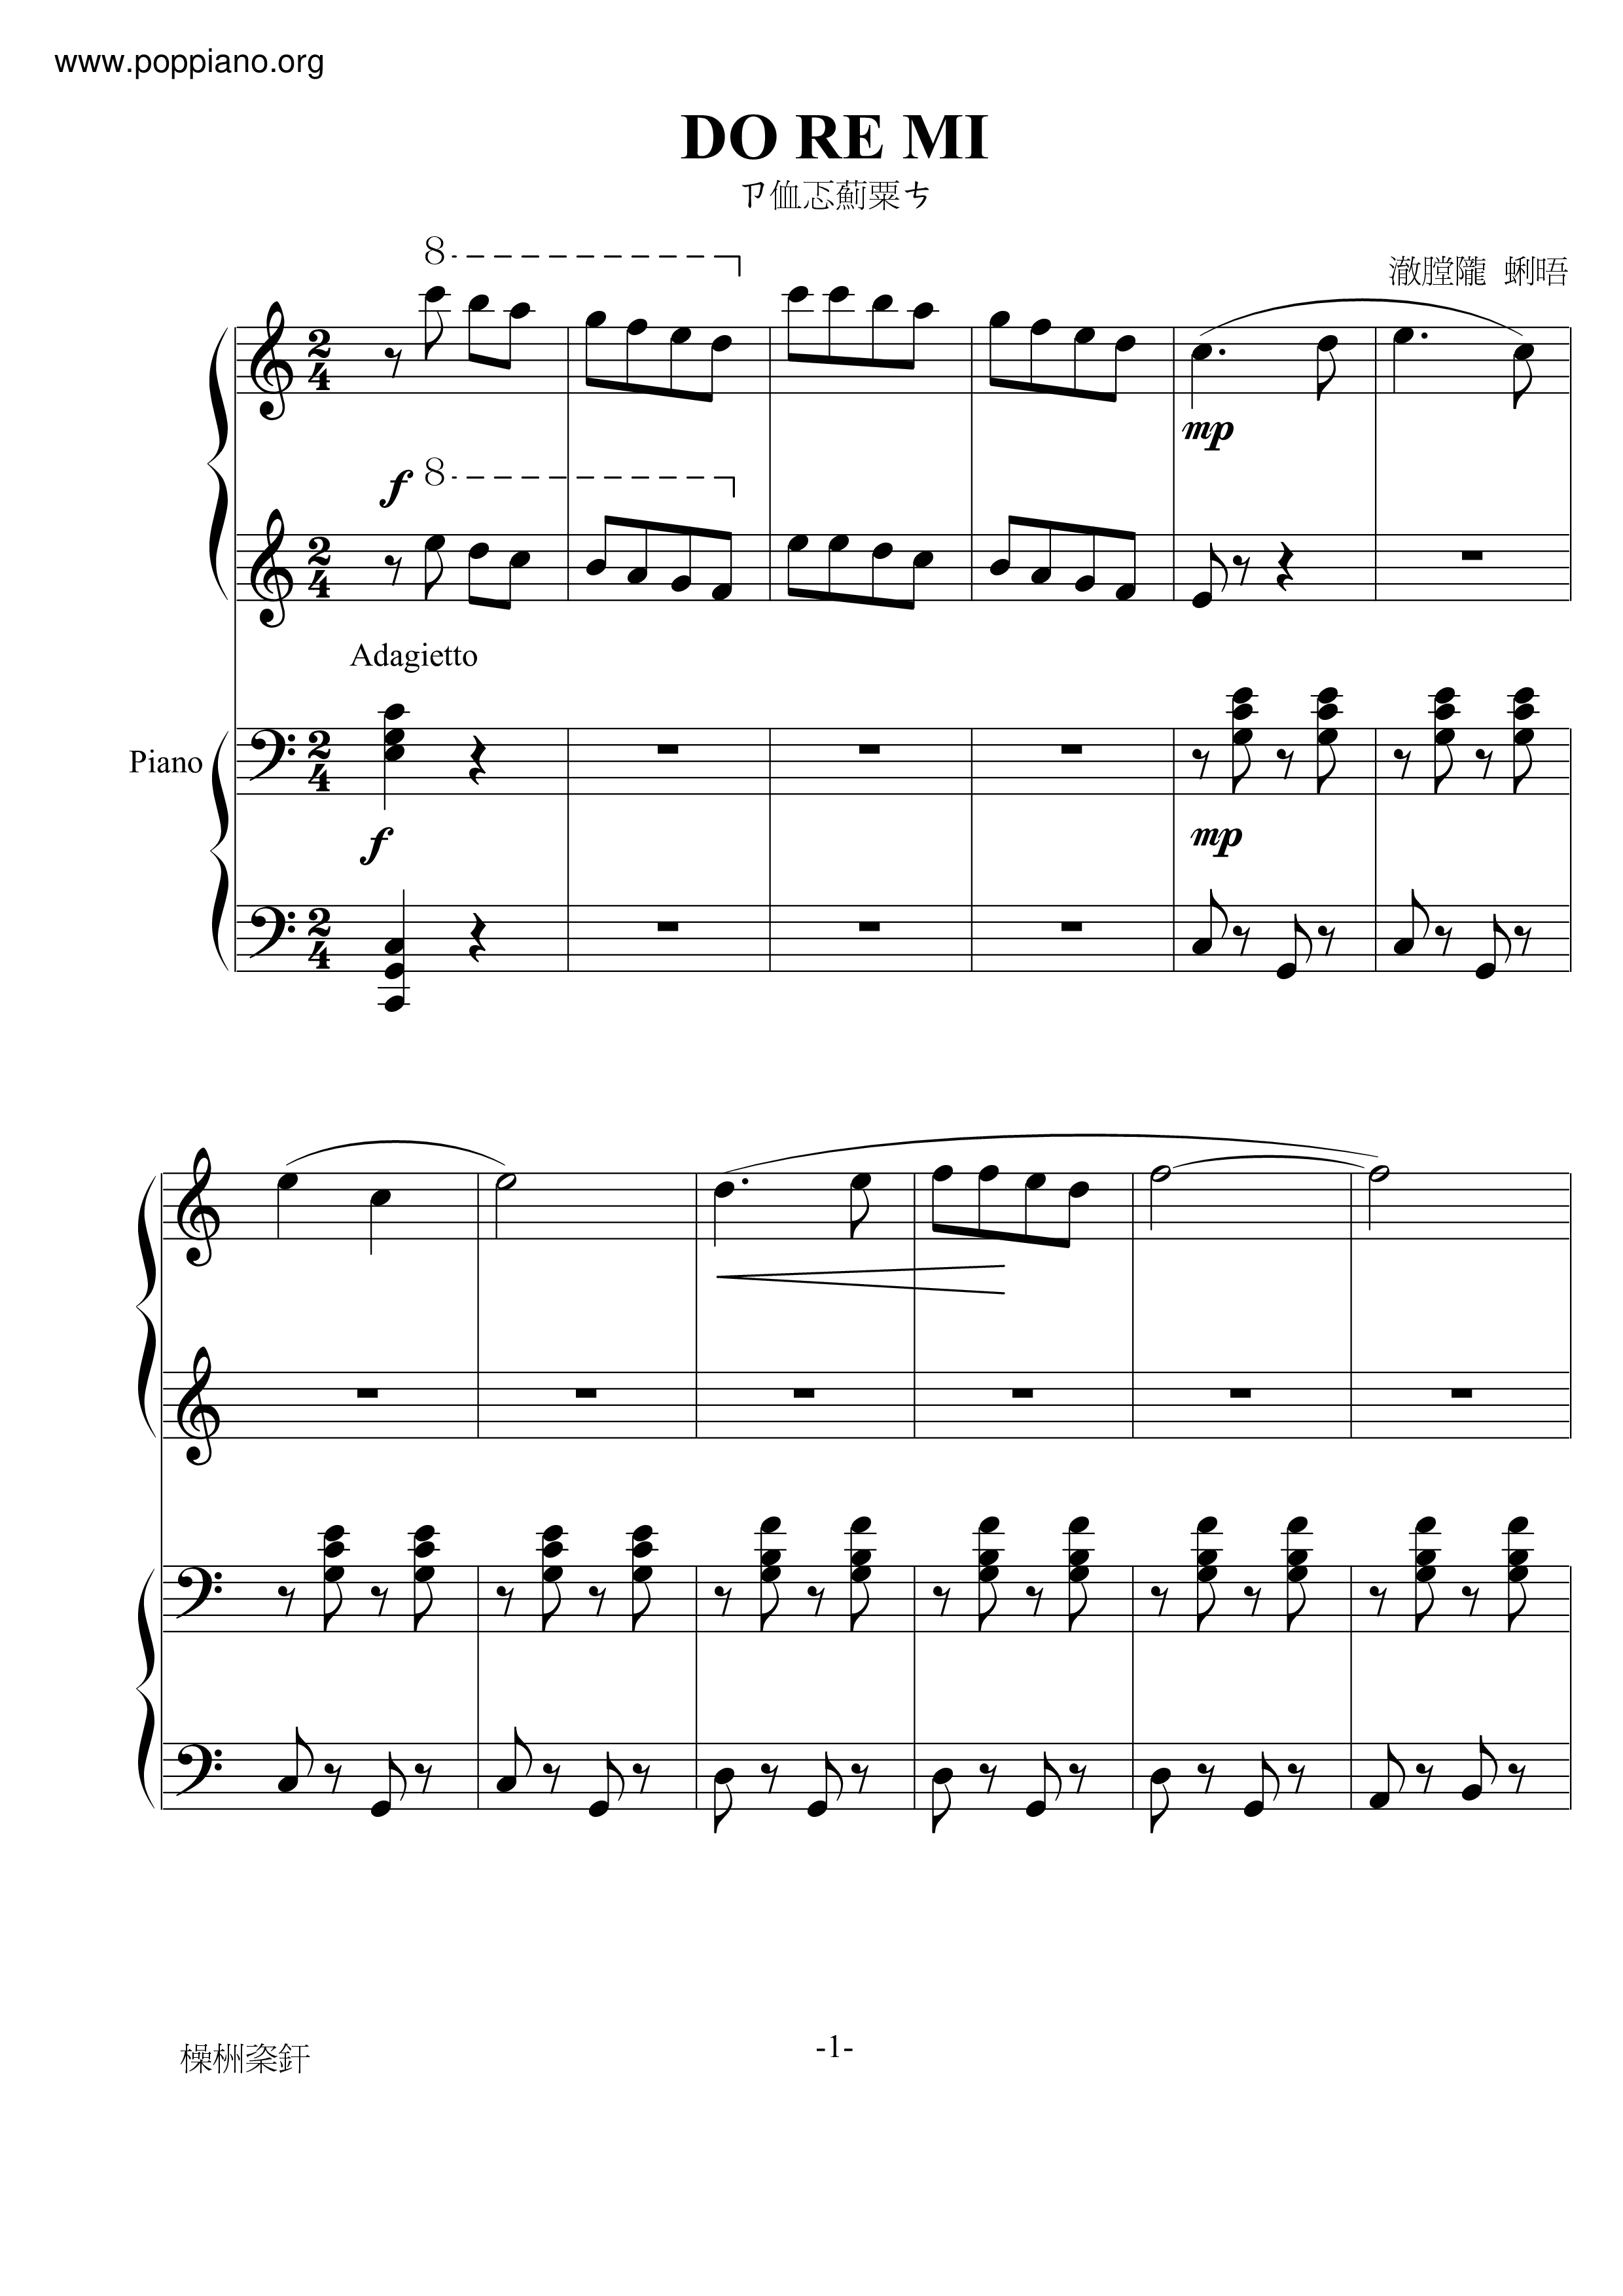 The Sound Of Music - Do-Re-Mi Score